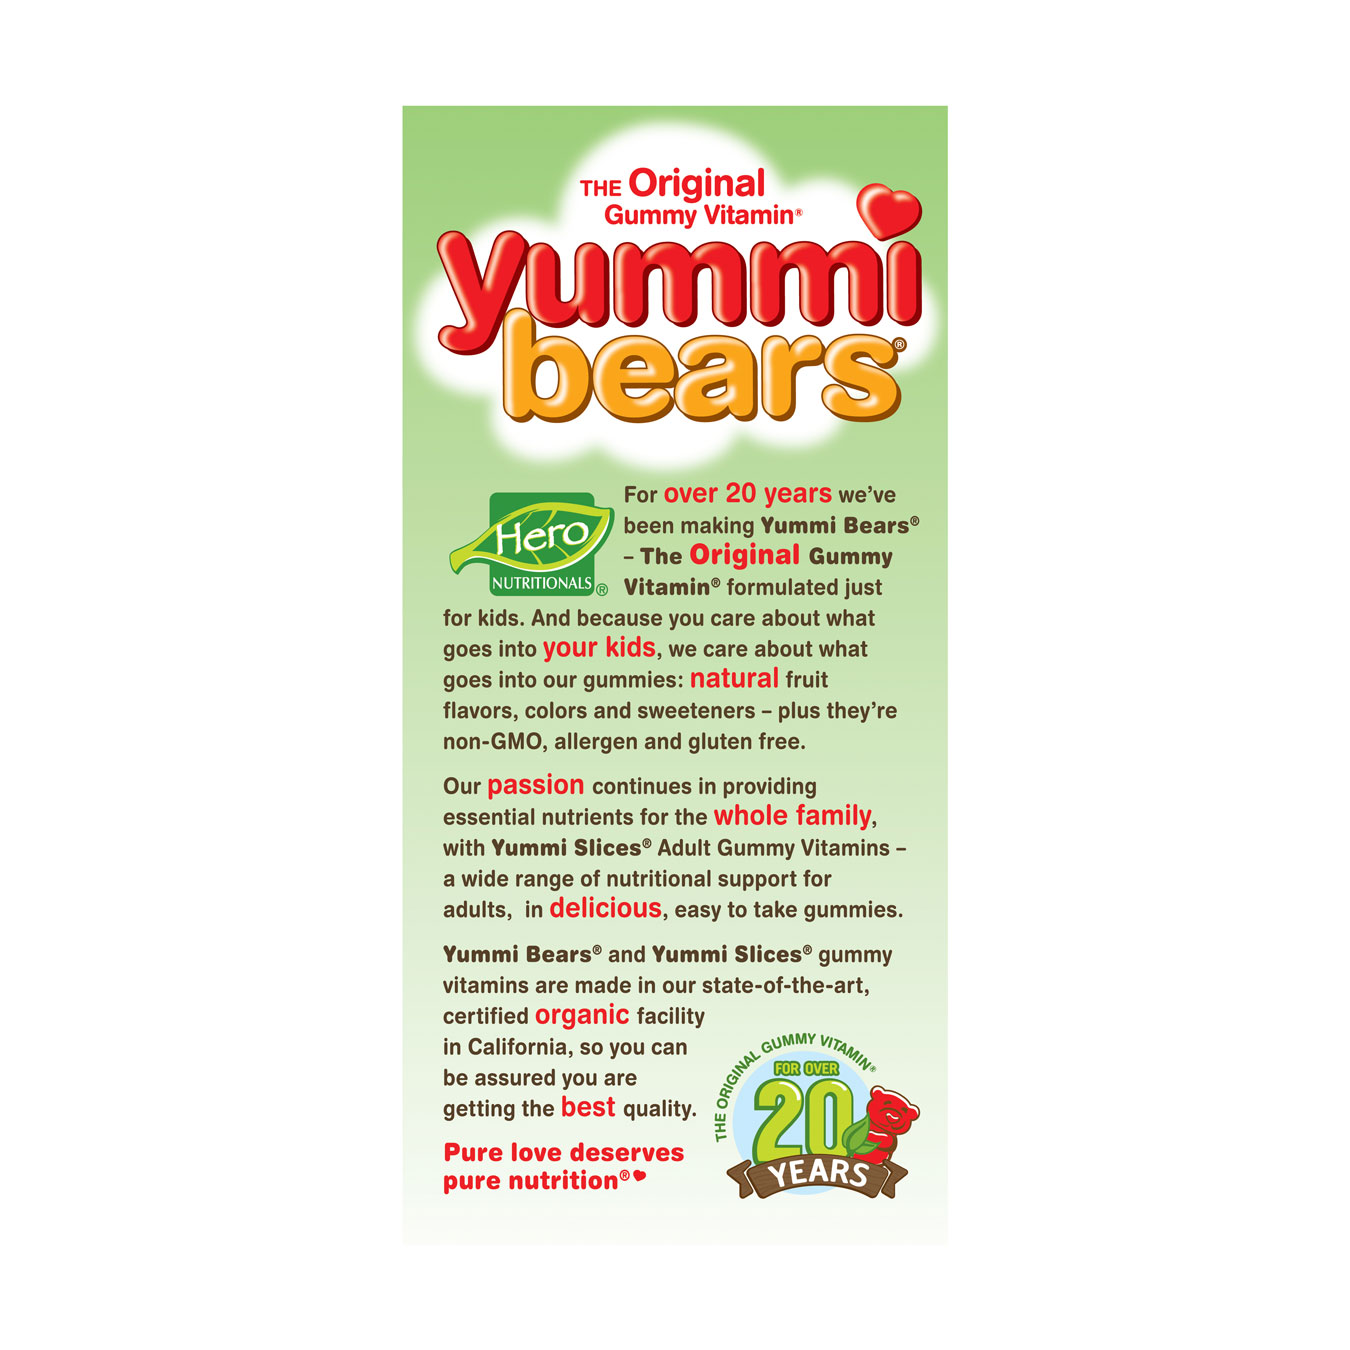 Yummi Bears- Vegetarian Calcium + Vitamin D3